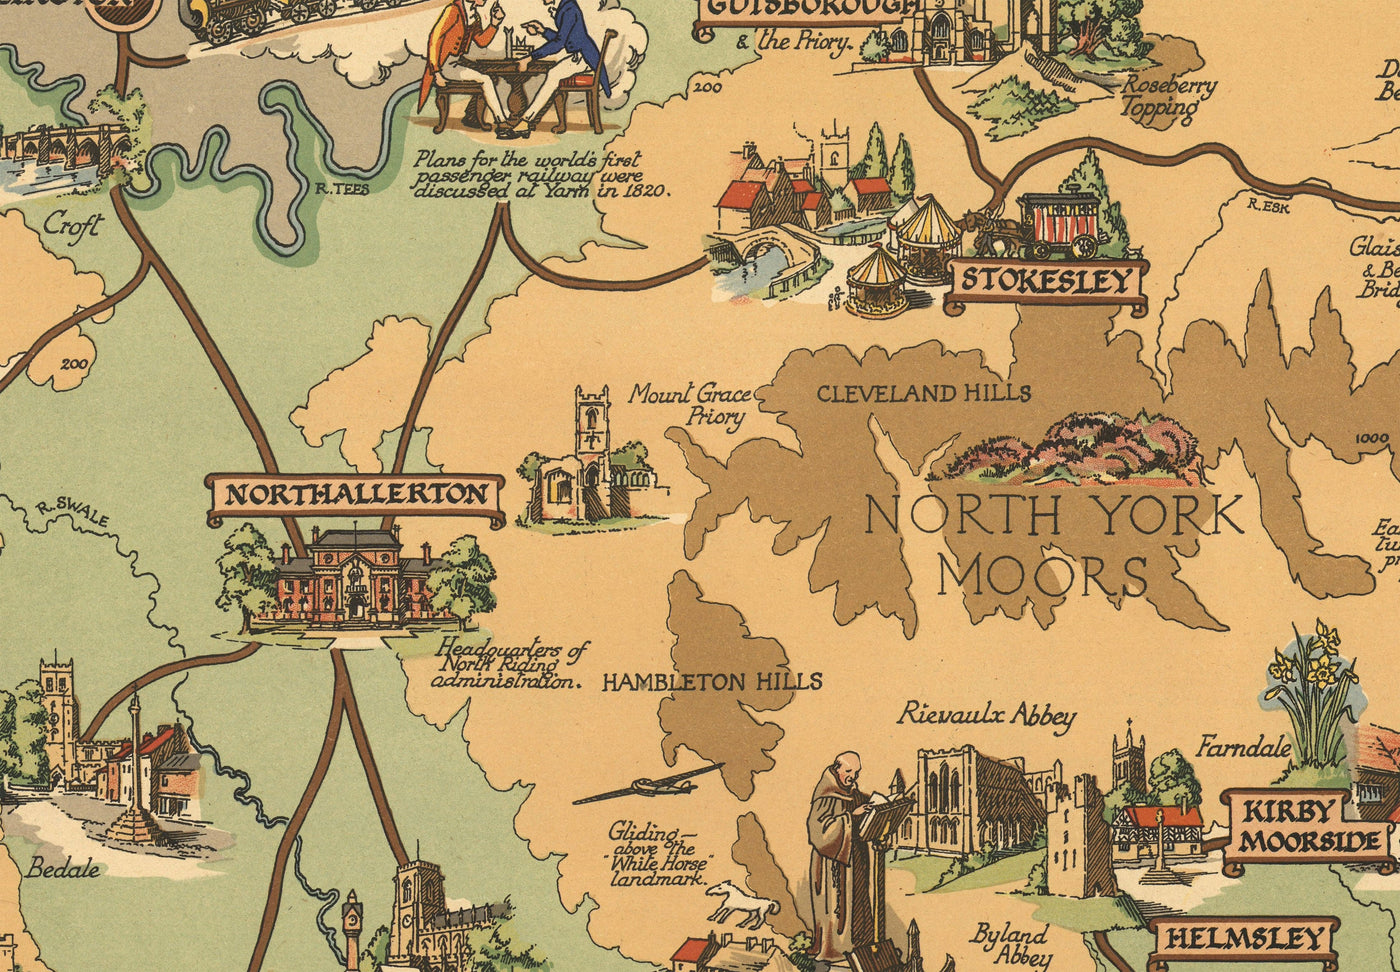 Old Map of Yorkshire, 1949 - British Railway Pictorial Chart - York, Sheffield, Bradford, Leeds, Middlesbrough, Pennines